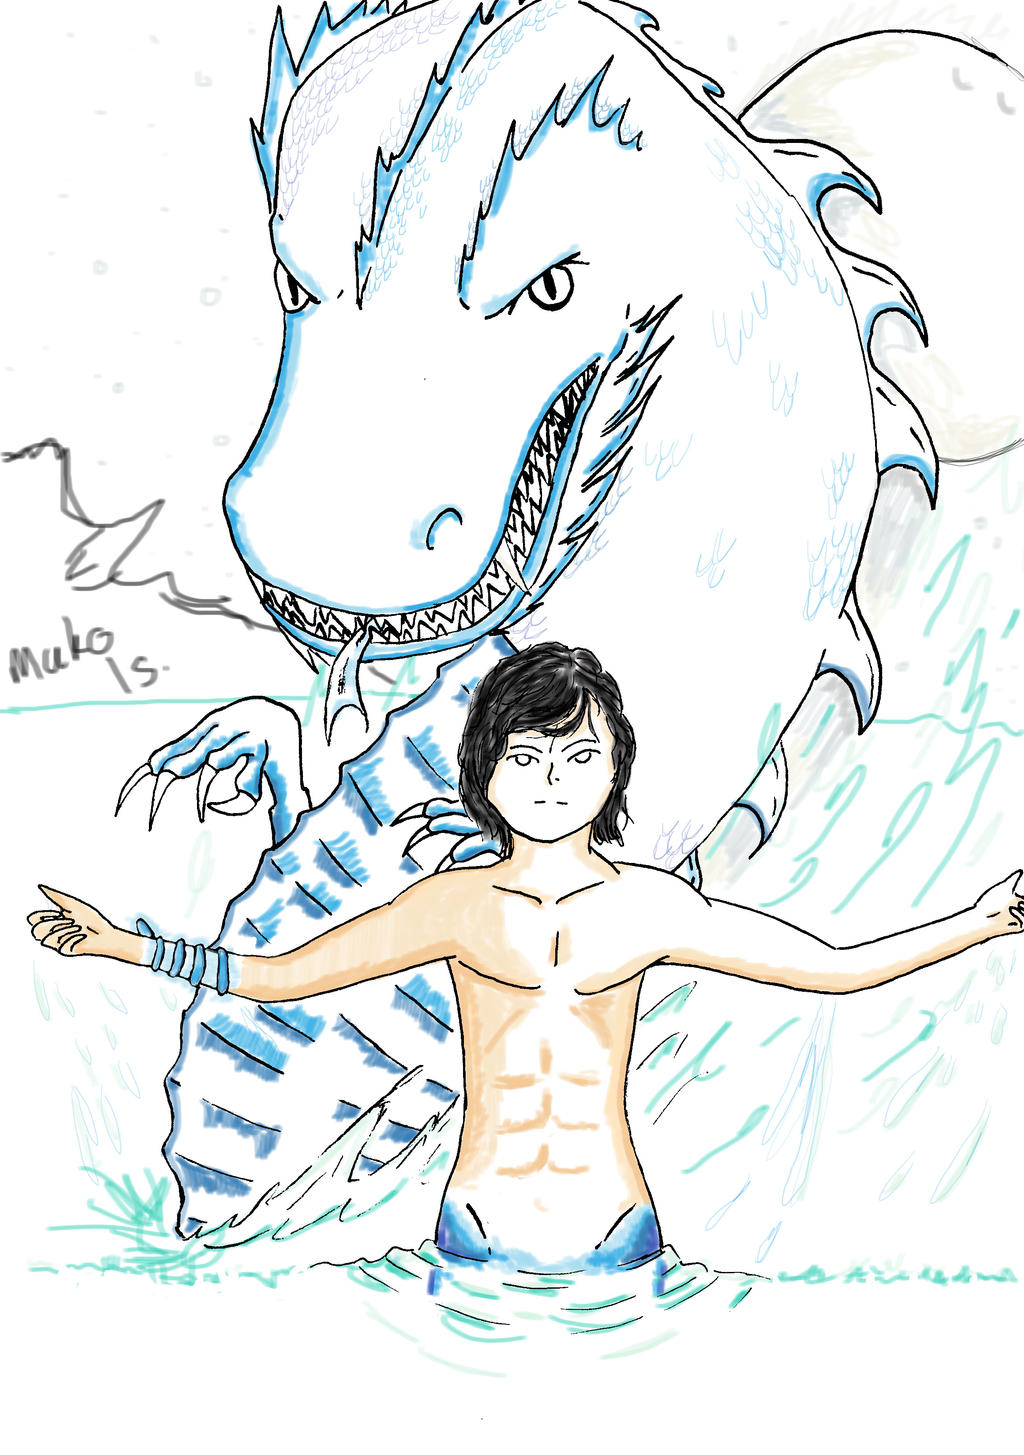 Zac in Merform- Mako Mermaids by Yugi-Dan-Yami on DeviantArt